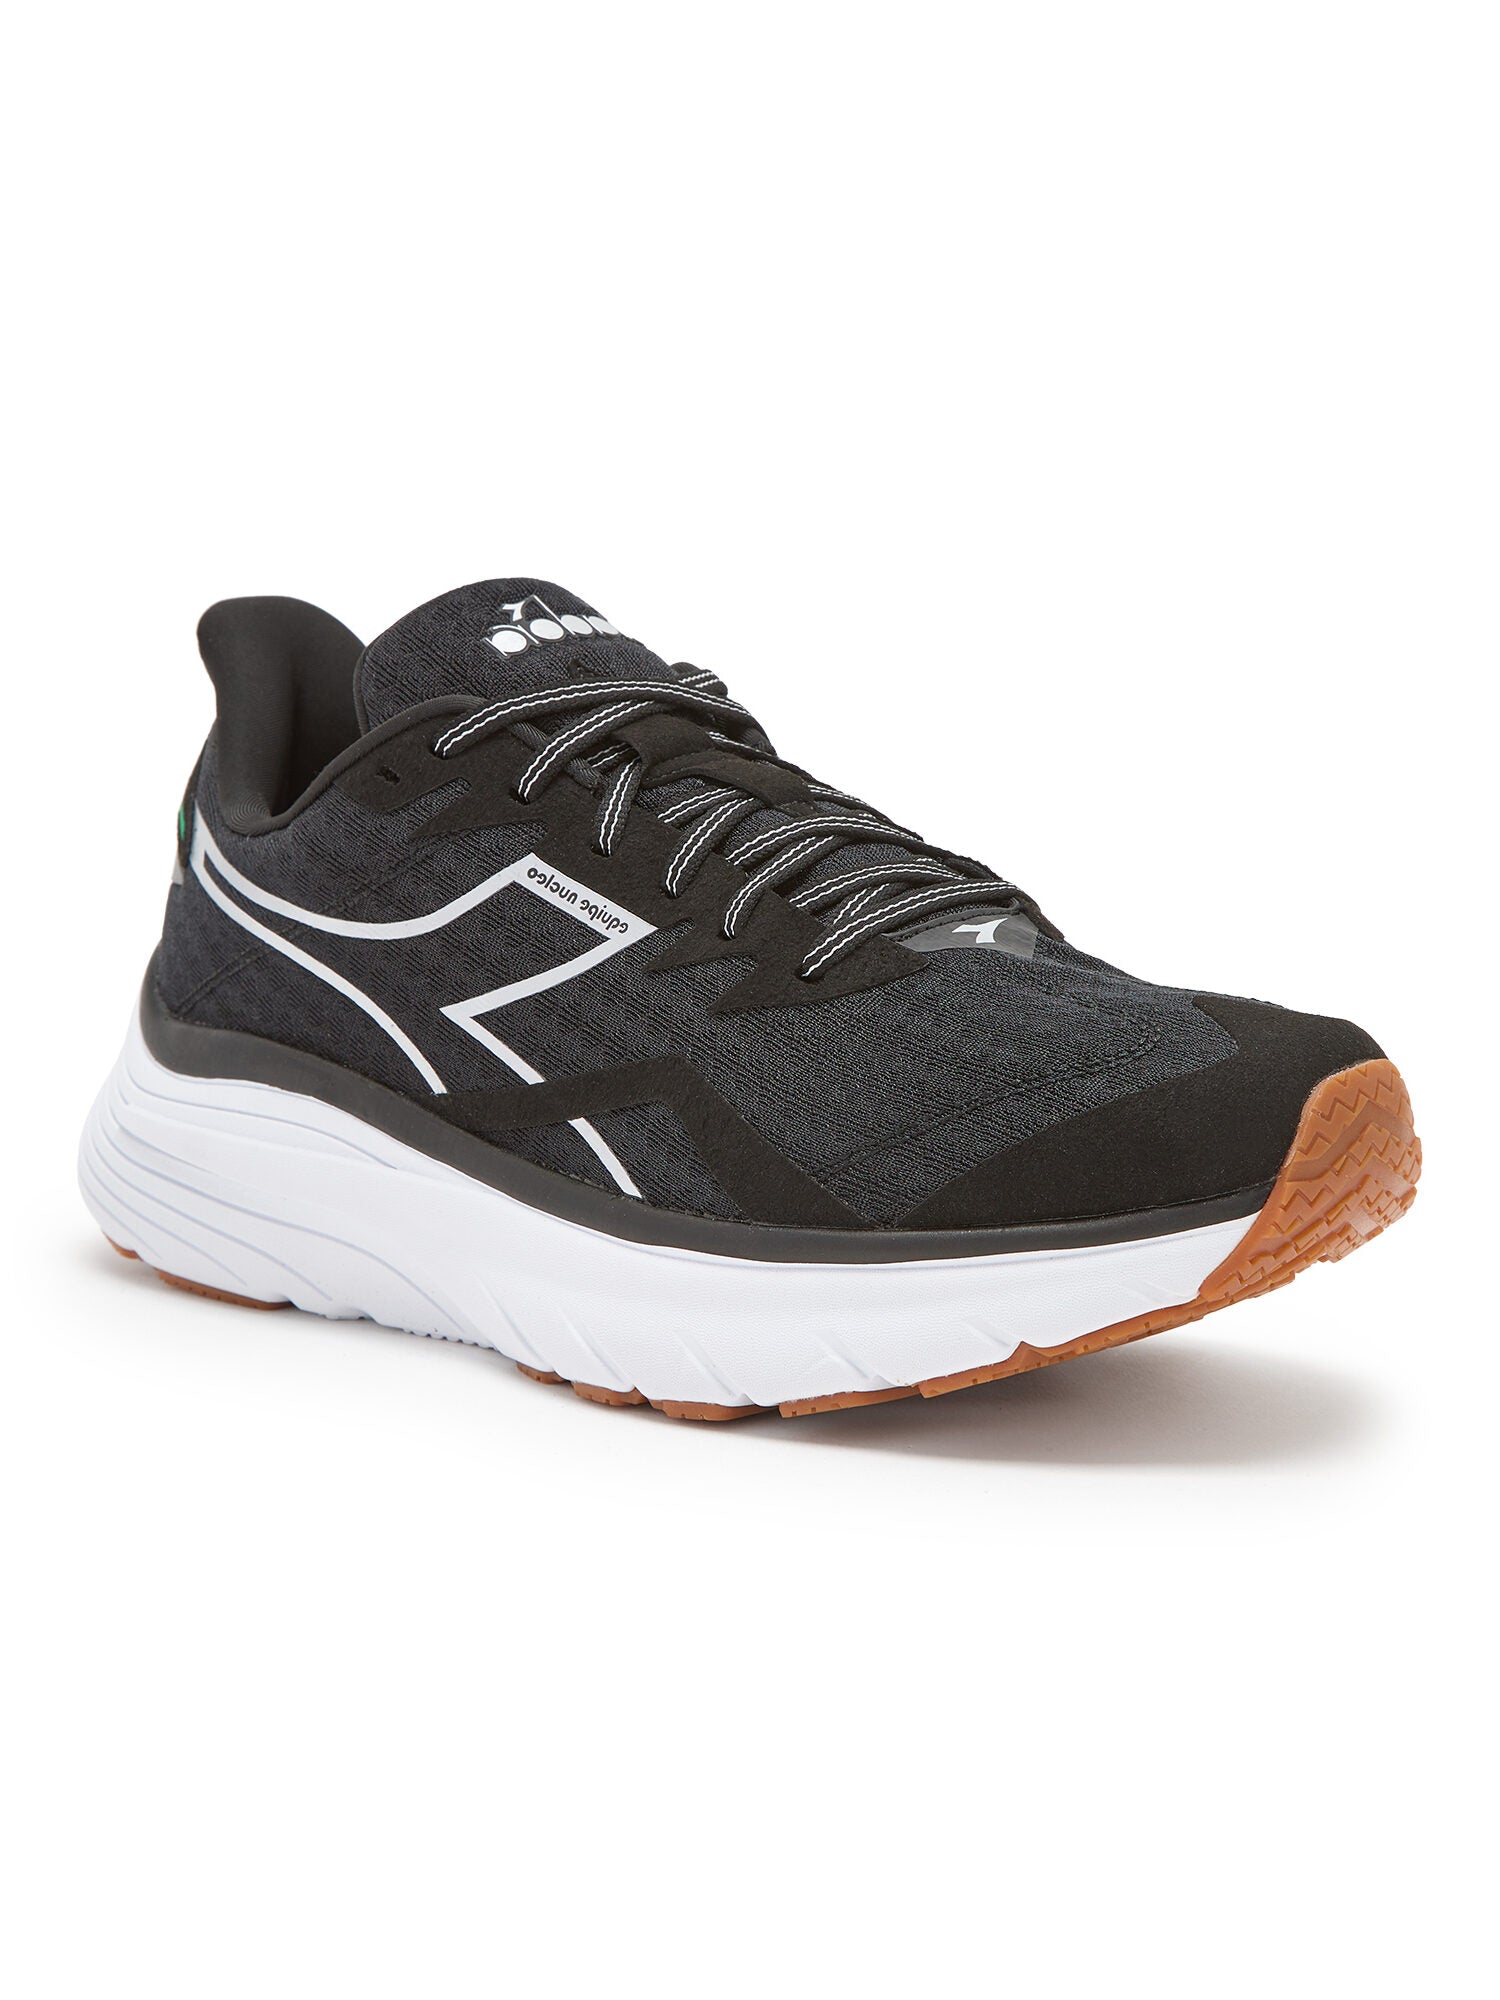 DIADORA Equipe Nucleo Black/Silver/White Men's Running Shoe 101.179094_C3513